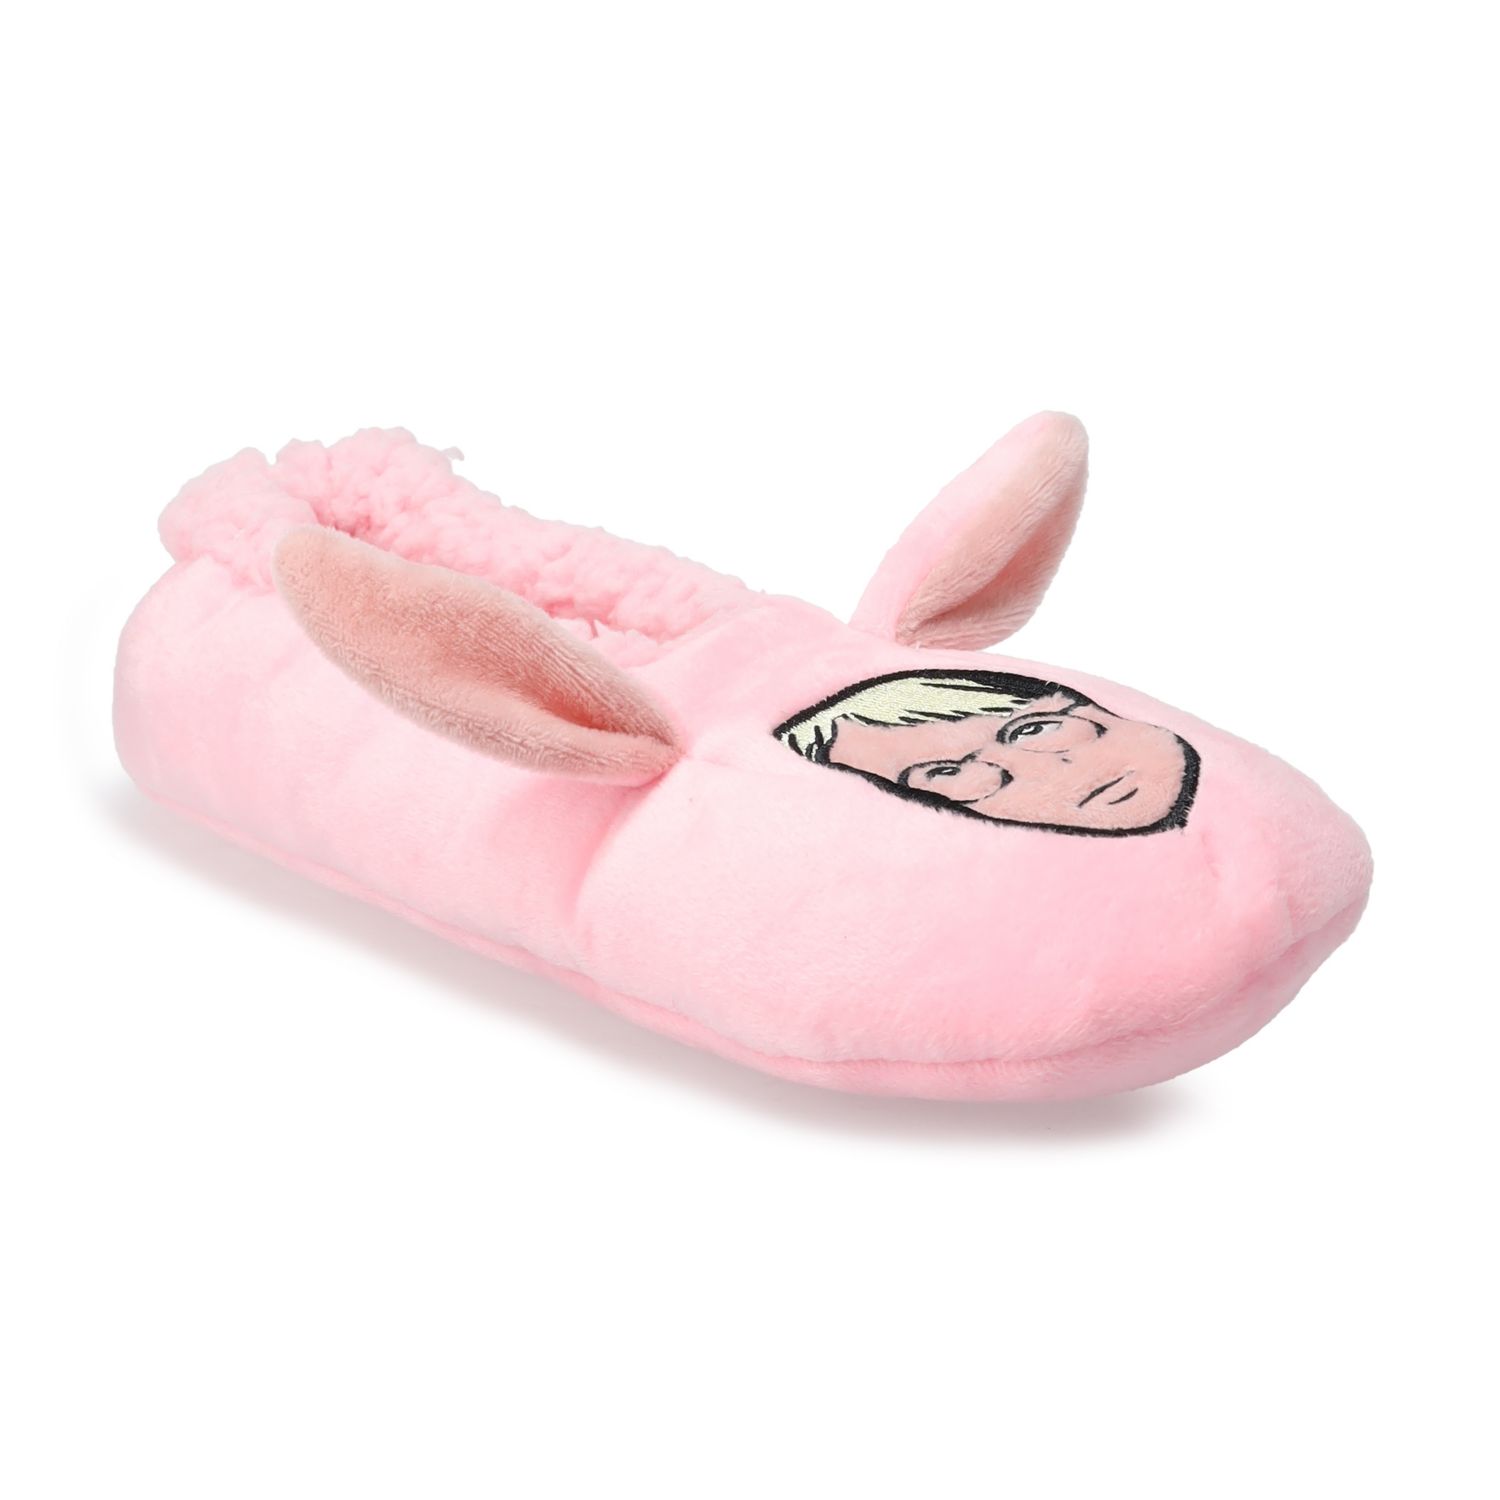 ralphie bunny slippers